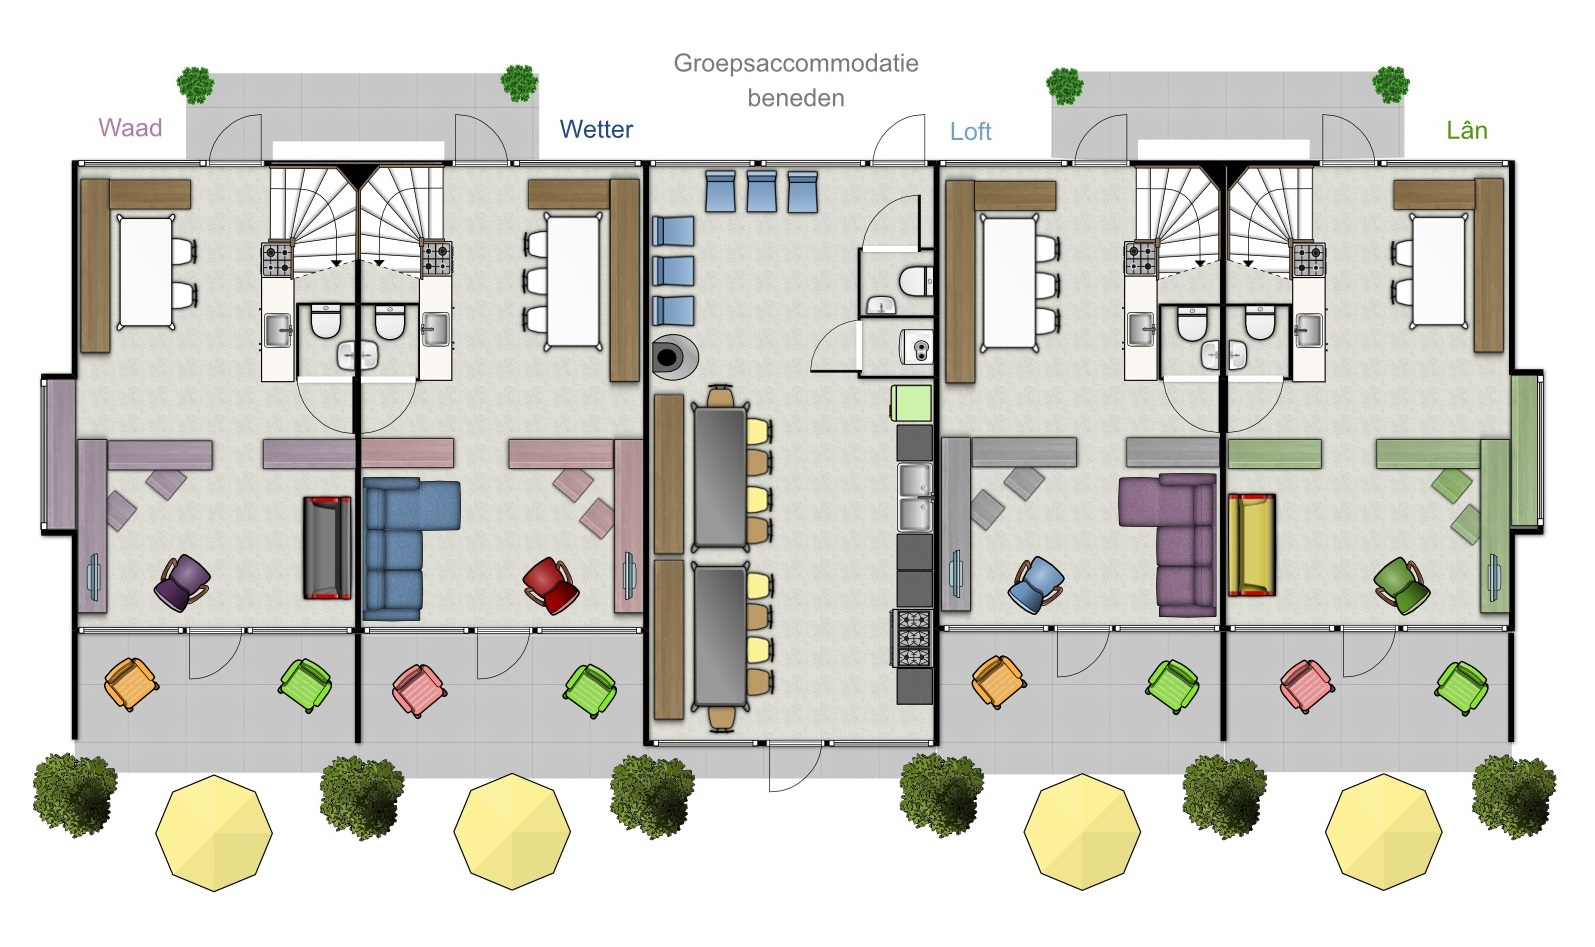 Groundplan Design Groupaccommodation Friesland Netherlands